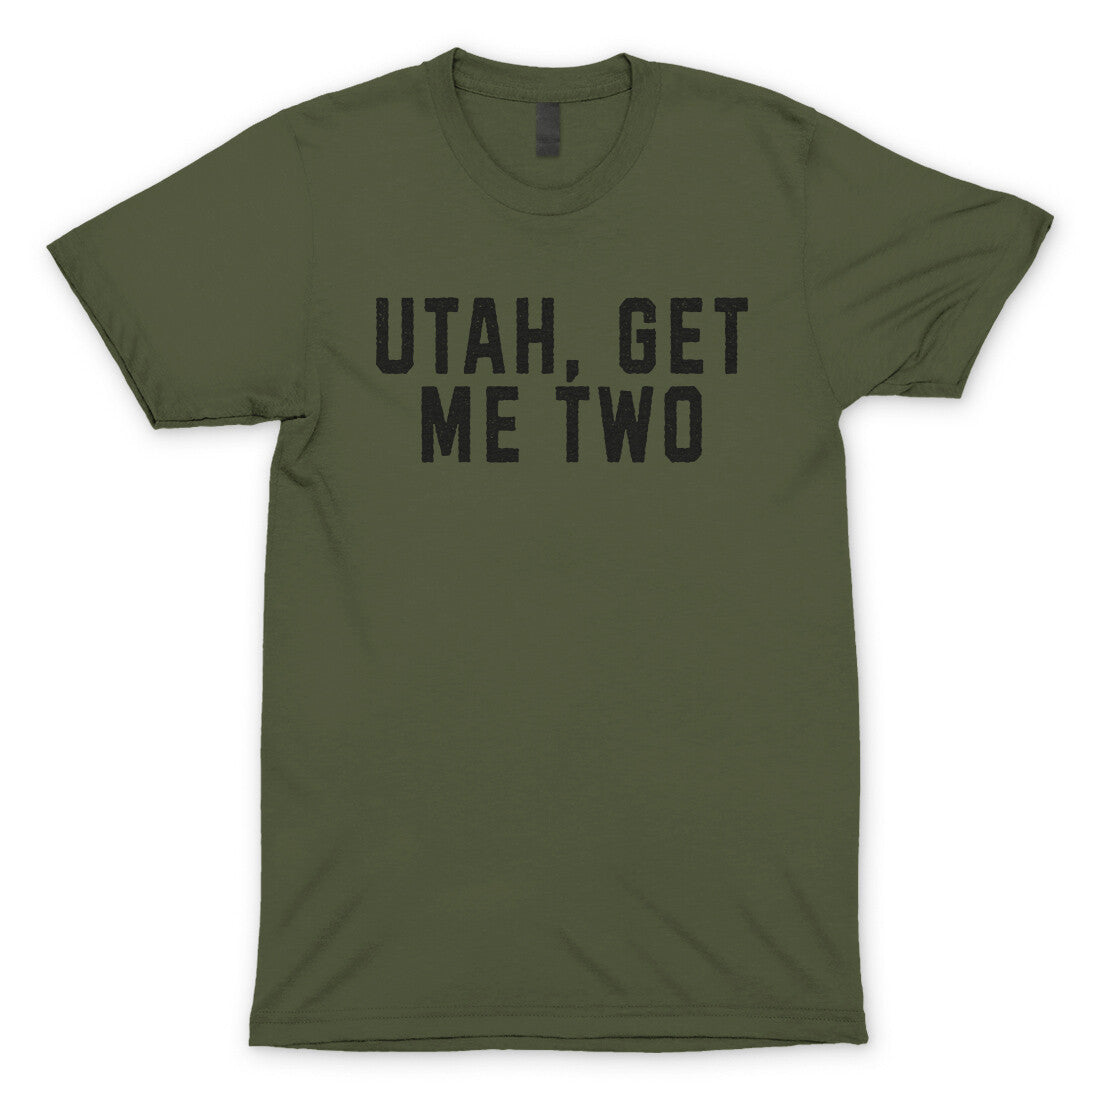 Utah Get me Two in Military Green Color